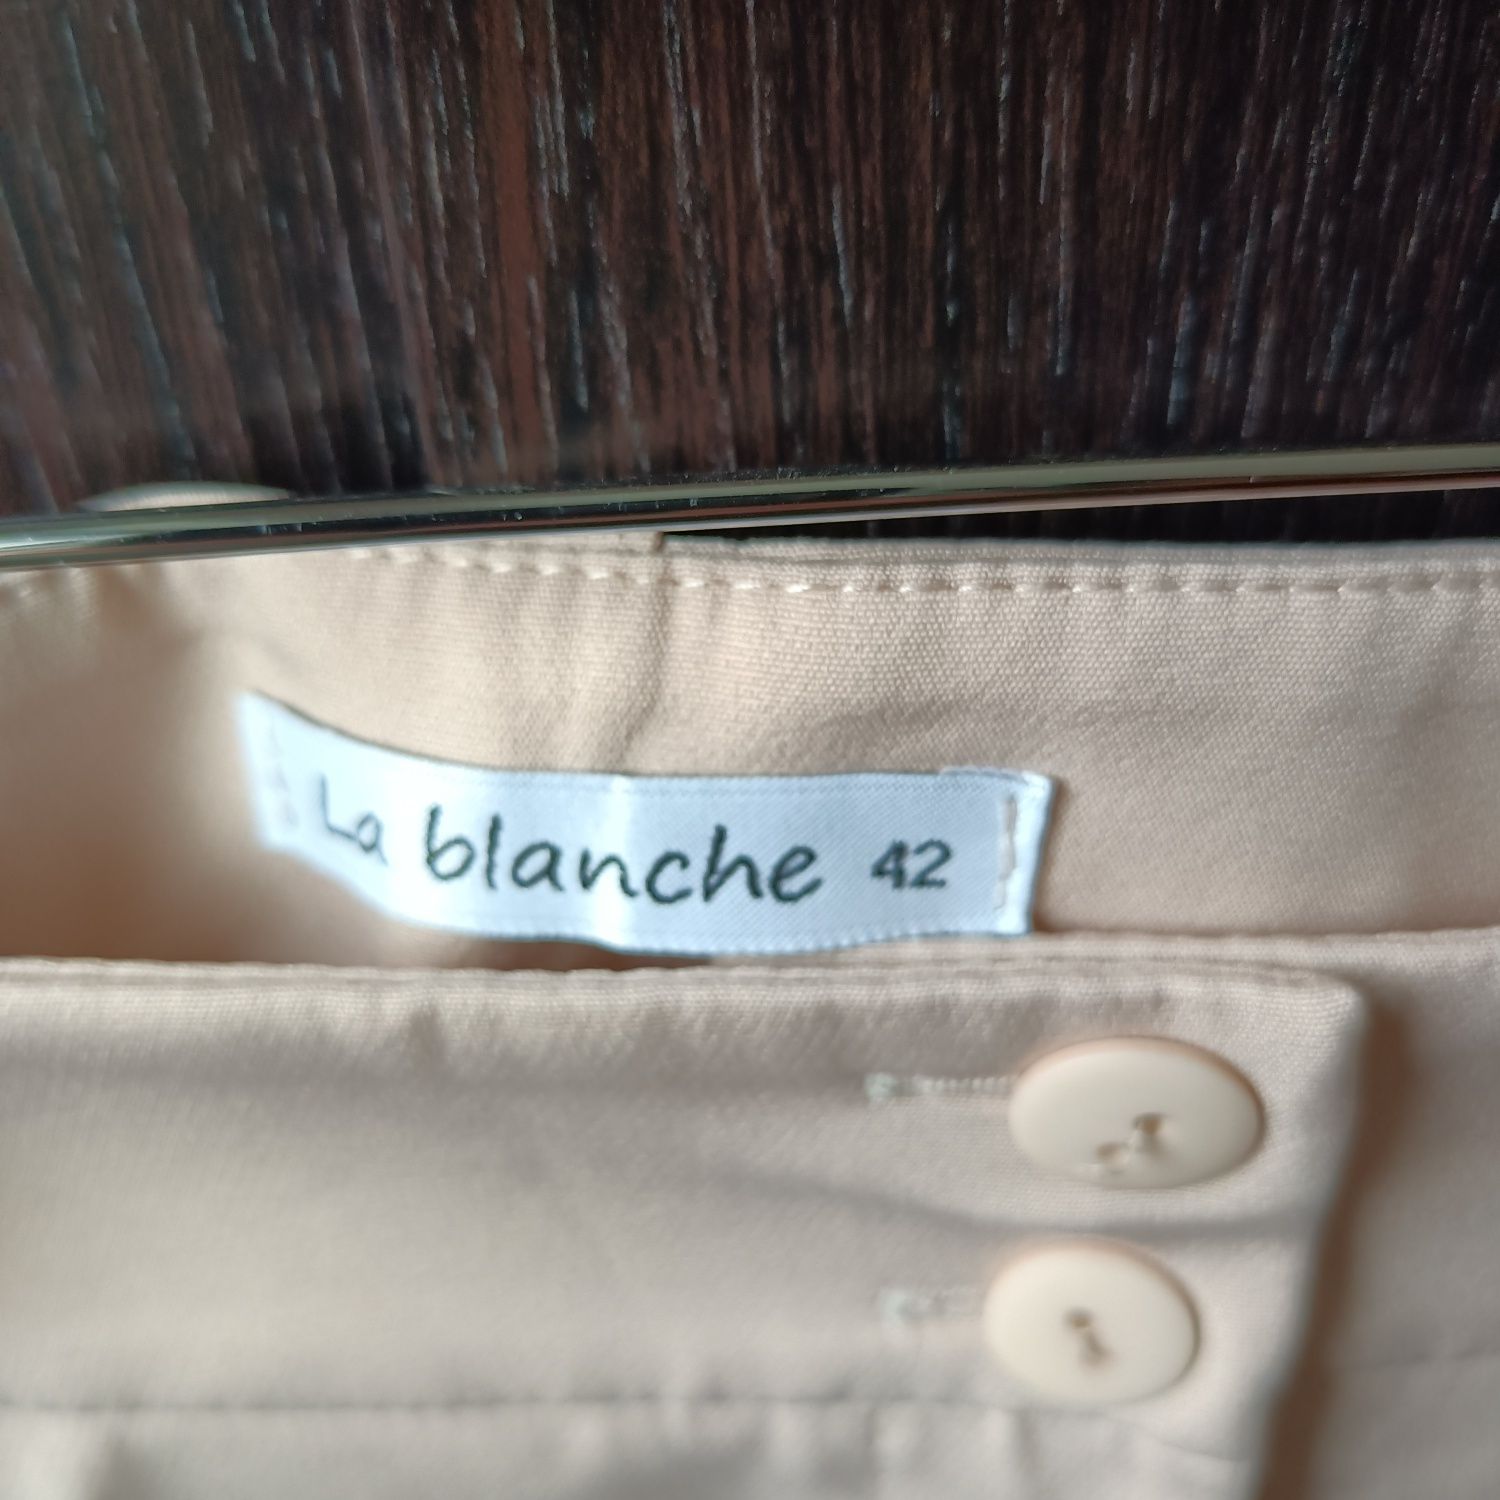 Spodnie La blanche r.42